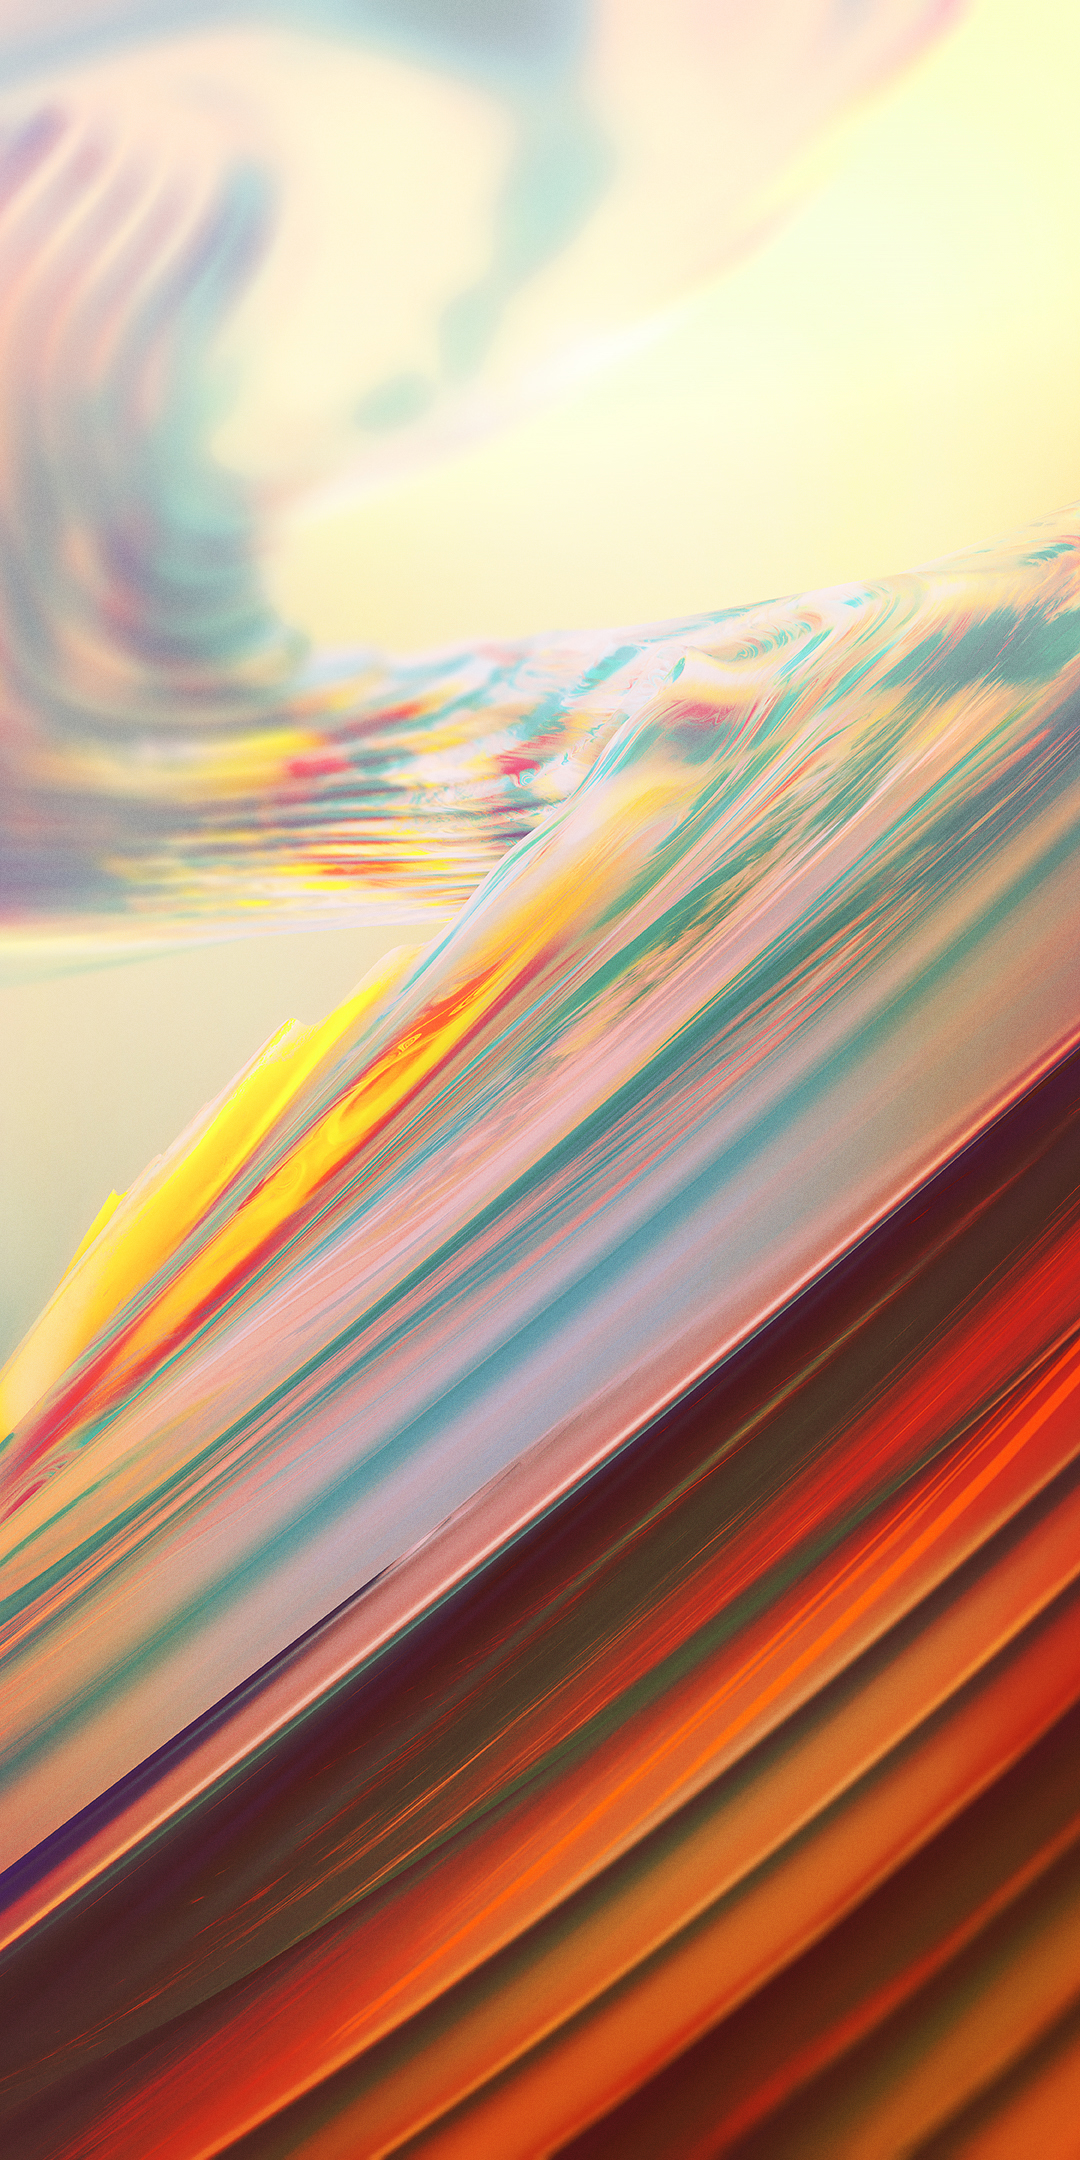 OnePlus-5T-Wallpapers (4).jpg